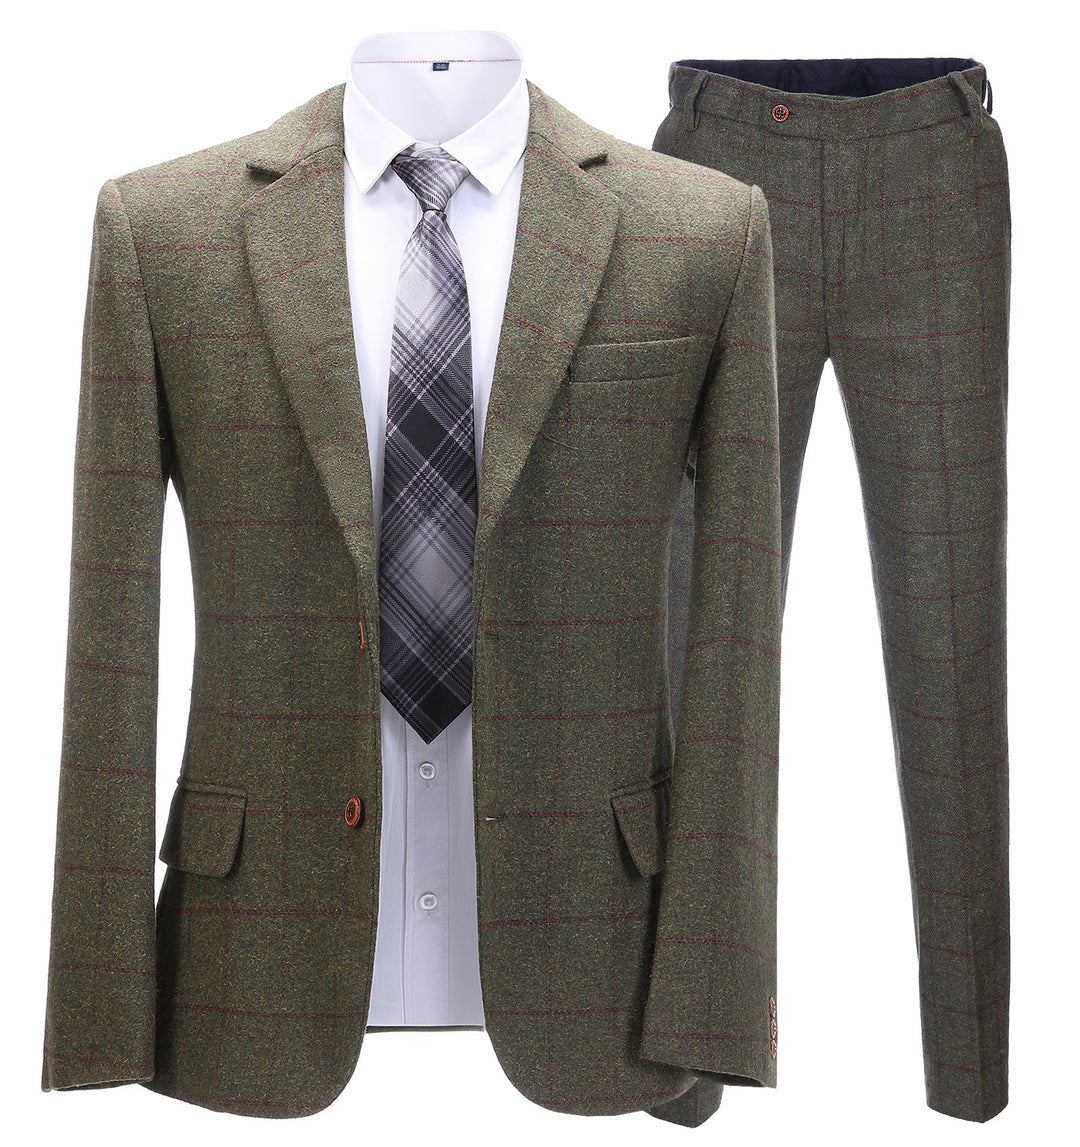 Men's 2 Pieces Formal Green Tweed Plaid Notch Lapel Tuxedos for Wedding(Blazer+Pants) mens event wear